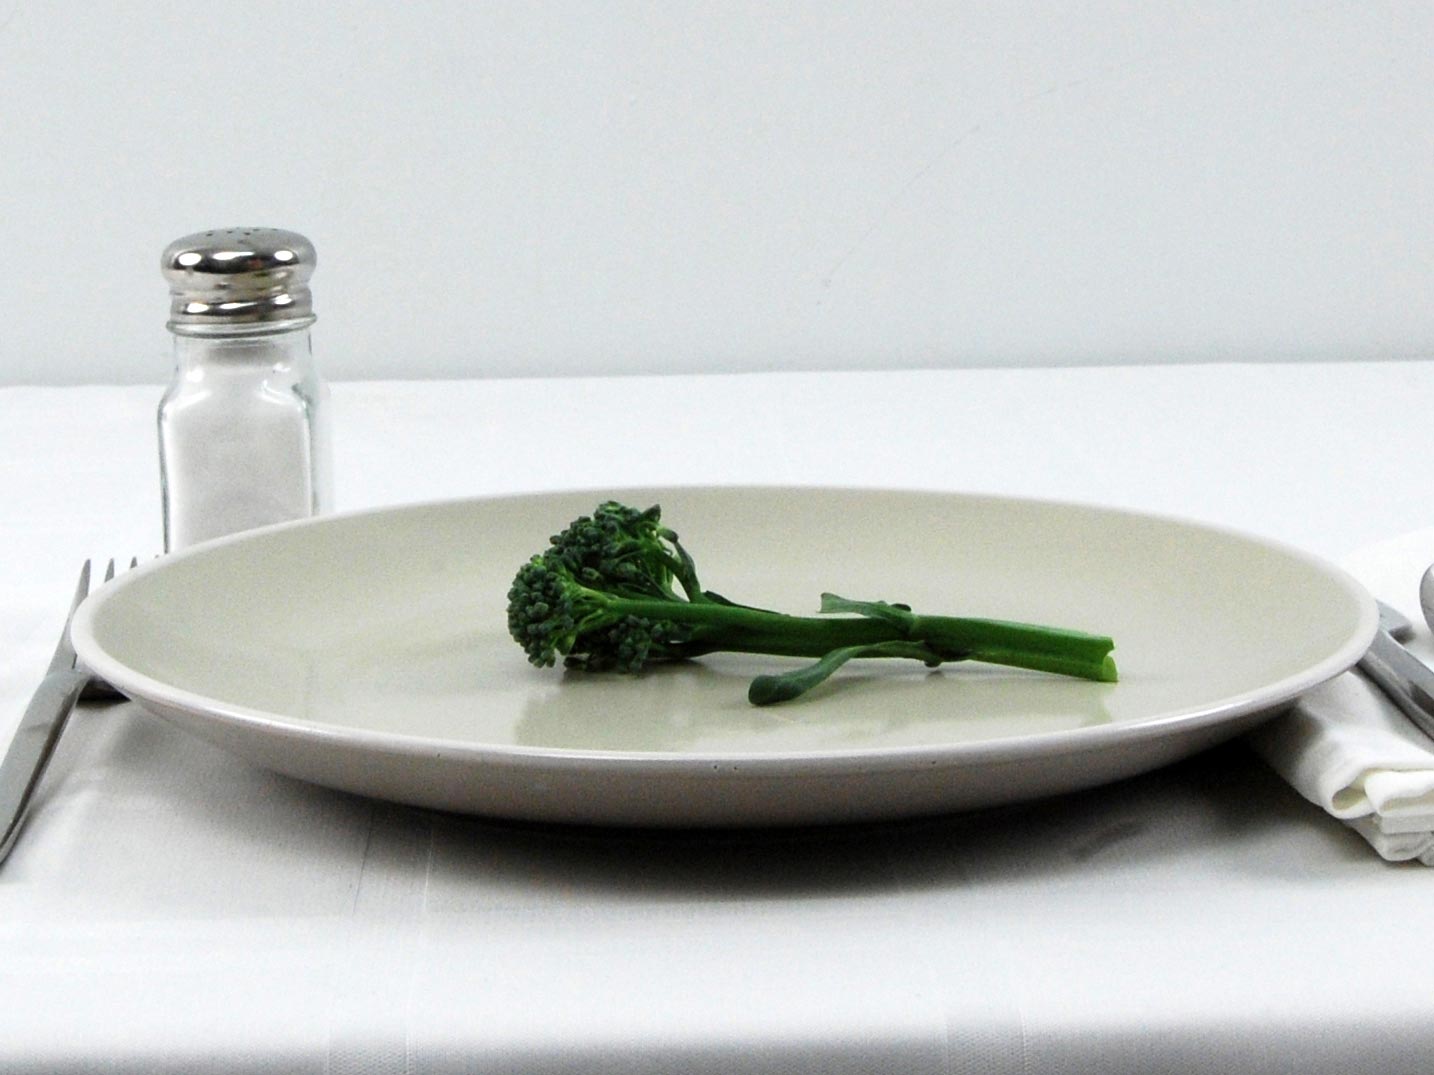 Calories in 9 grams of Broccolini